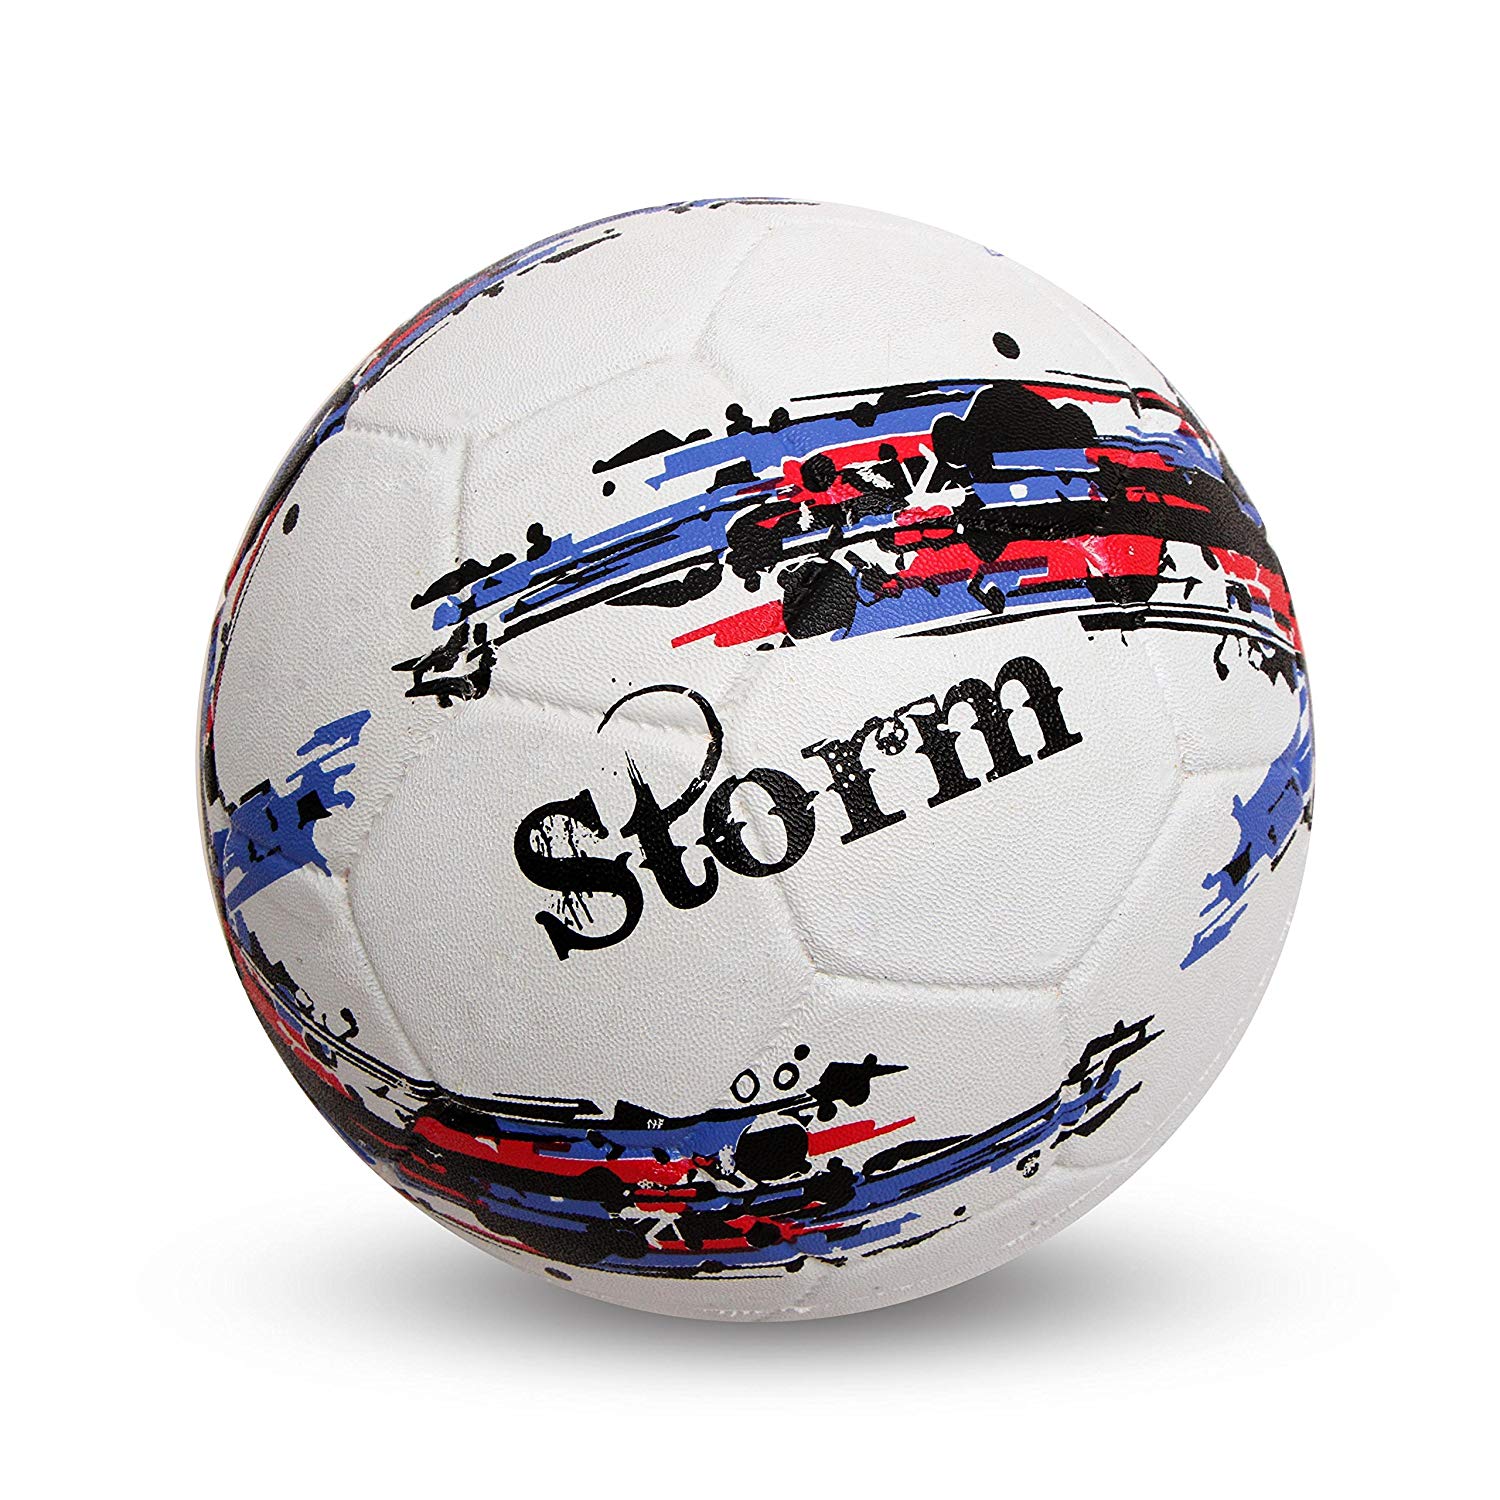 Nivia Storm Football, Size 5 (White) - Best Price online Prokicksports.com